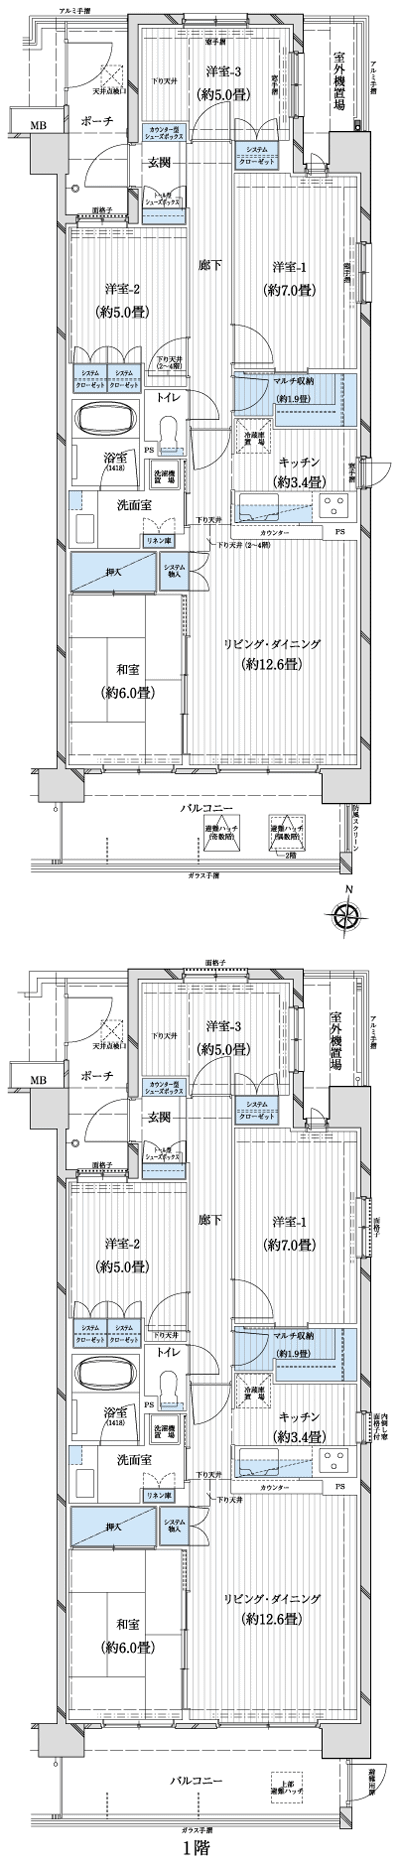 Floor: 4LDK + multi-housed, the area occupied: 87.71 sq m